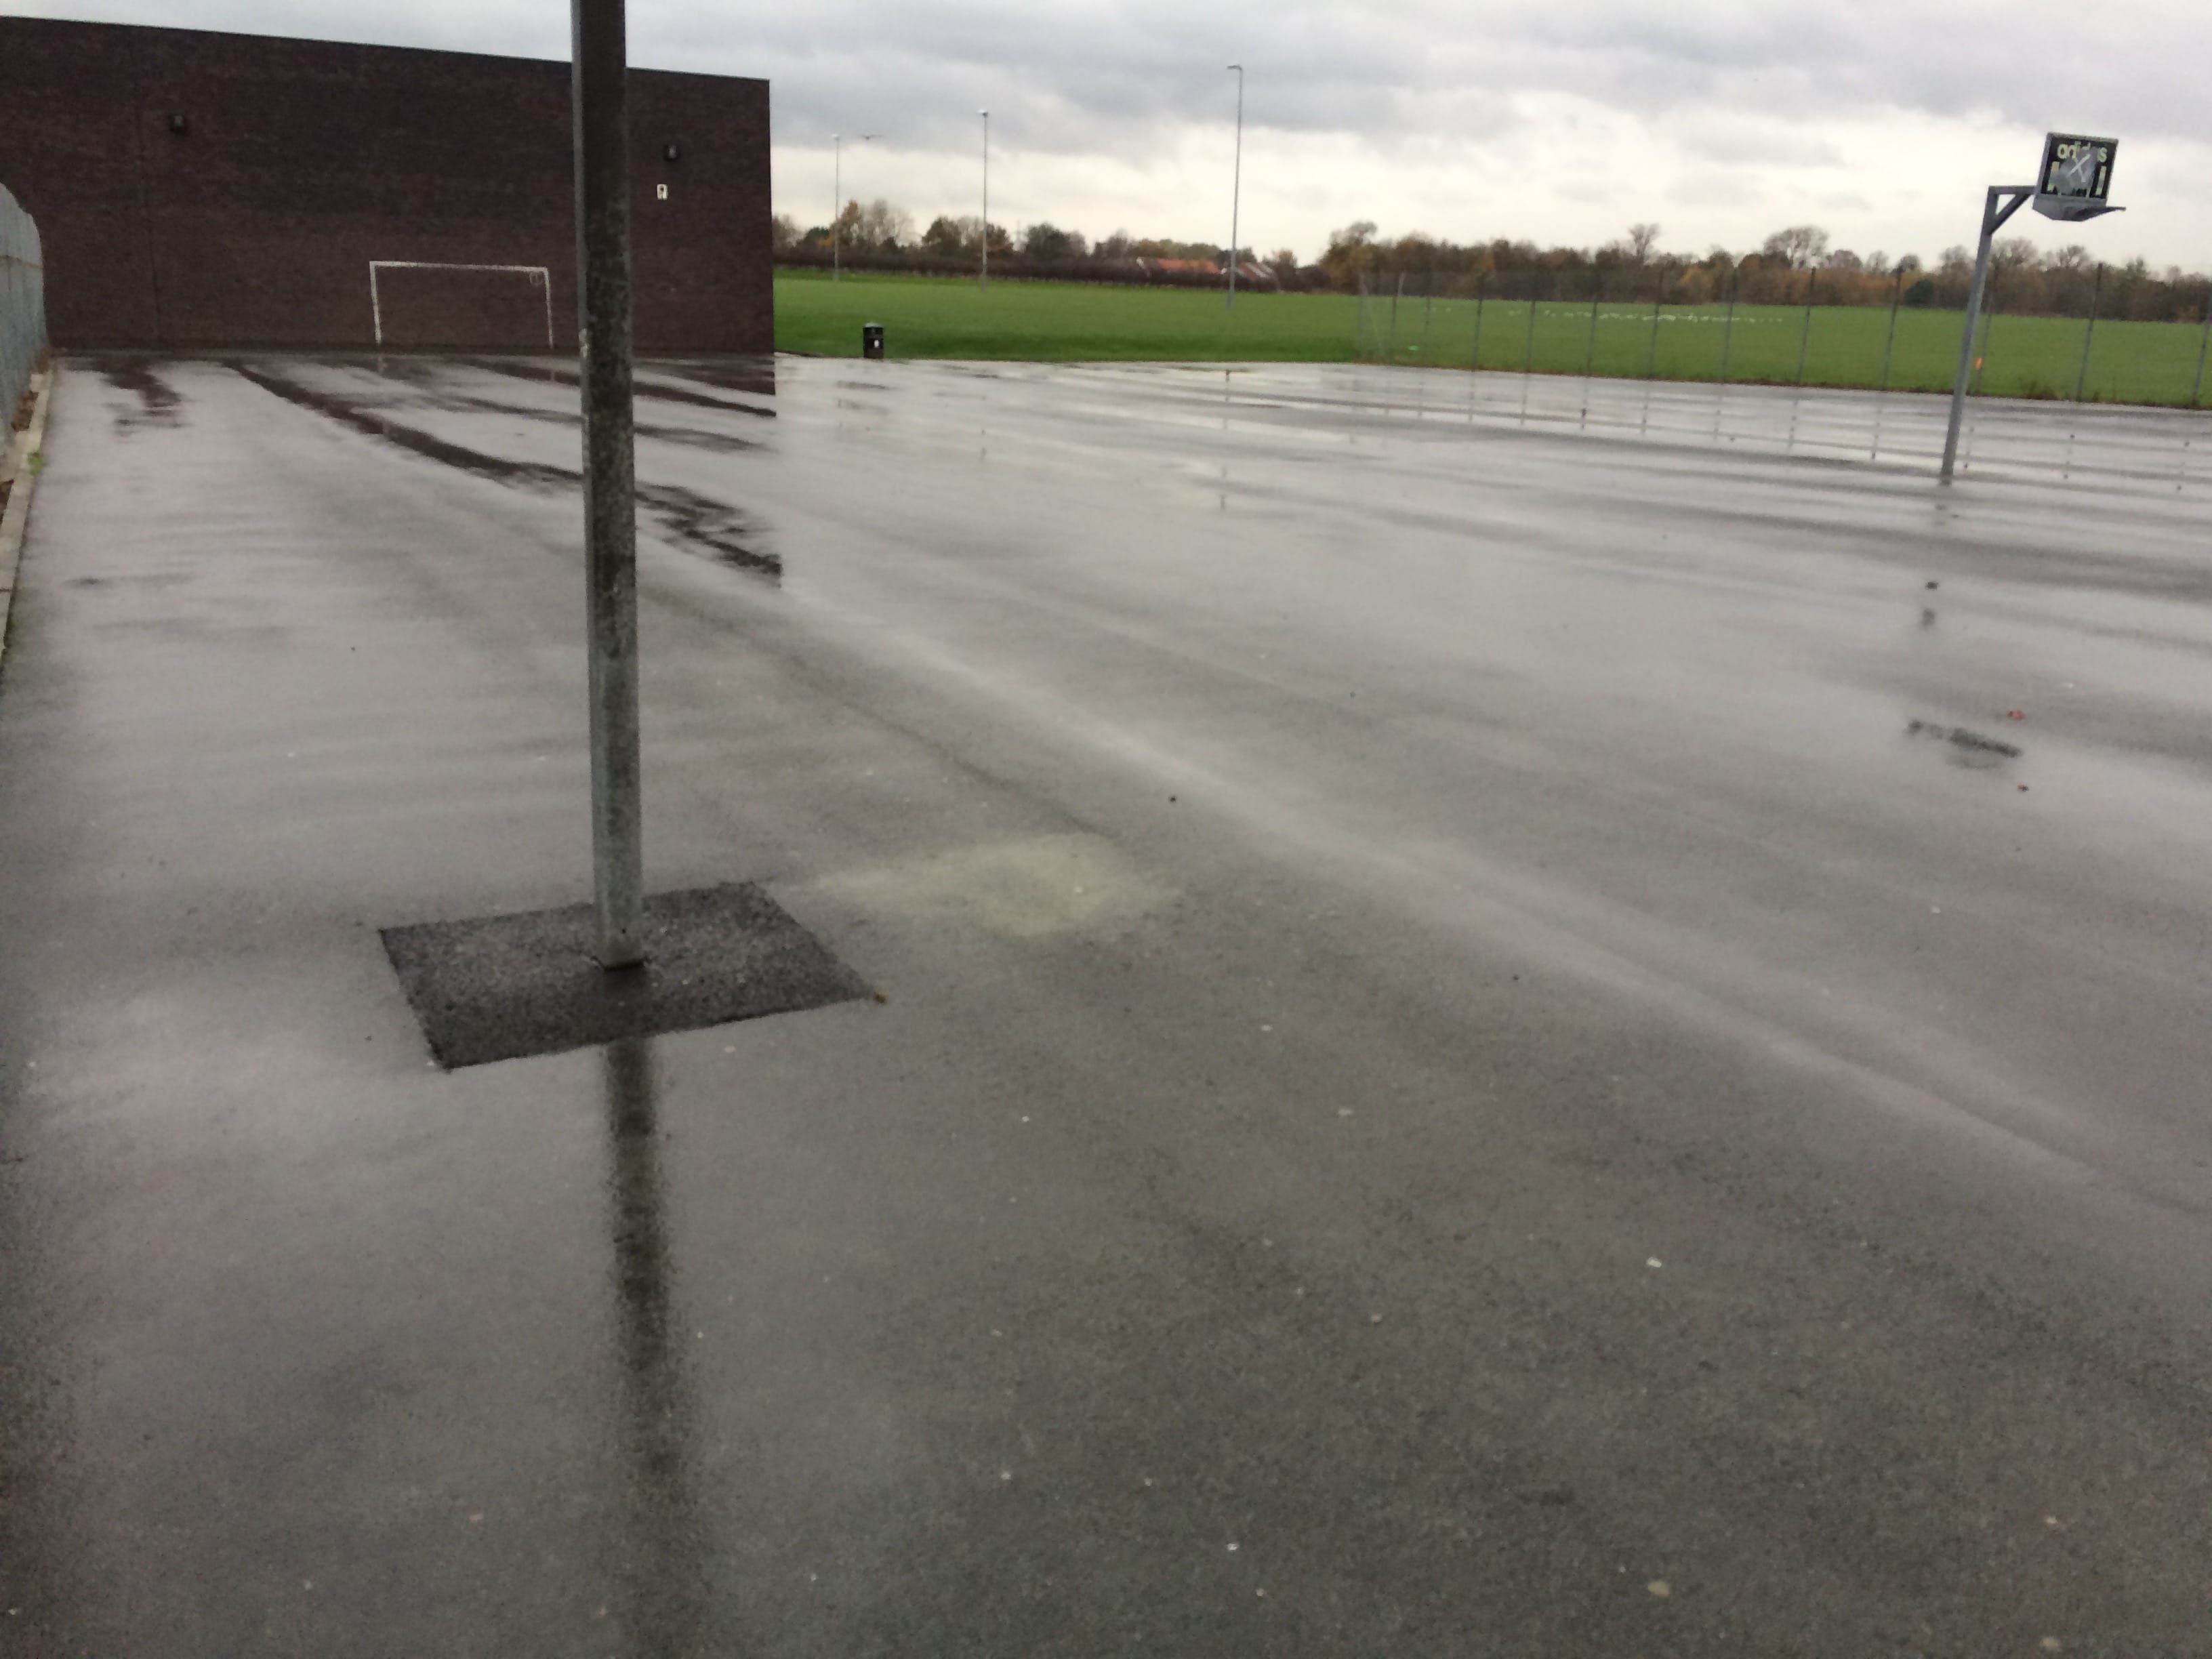 concrete sports surface in the rain